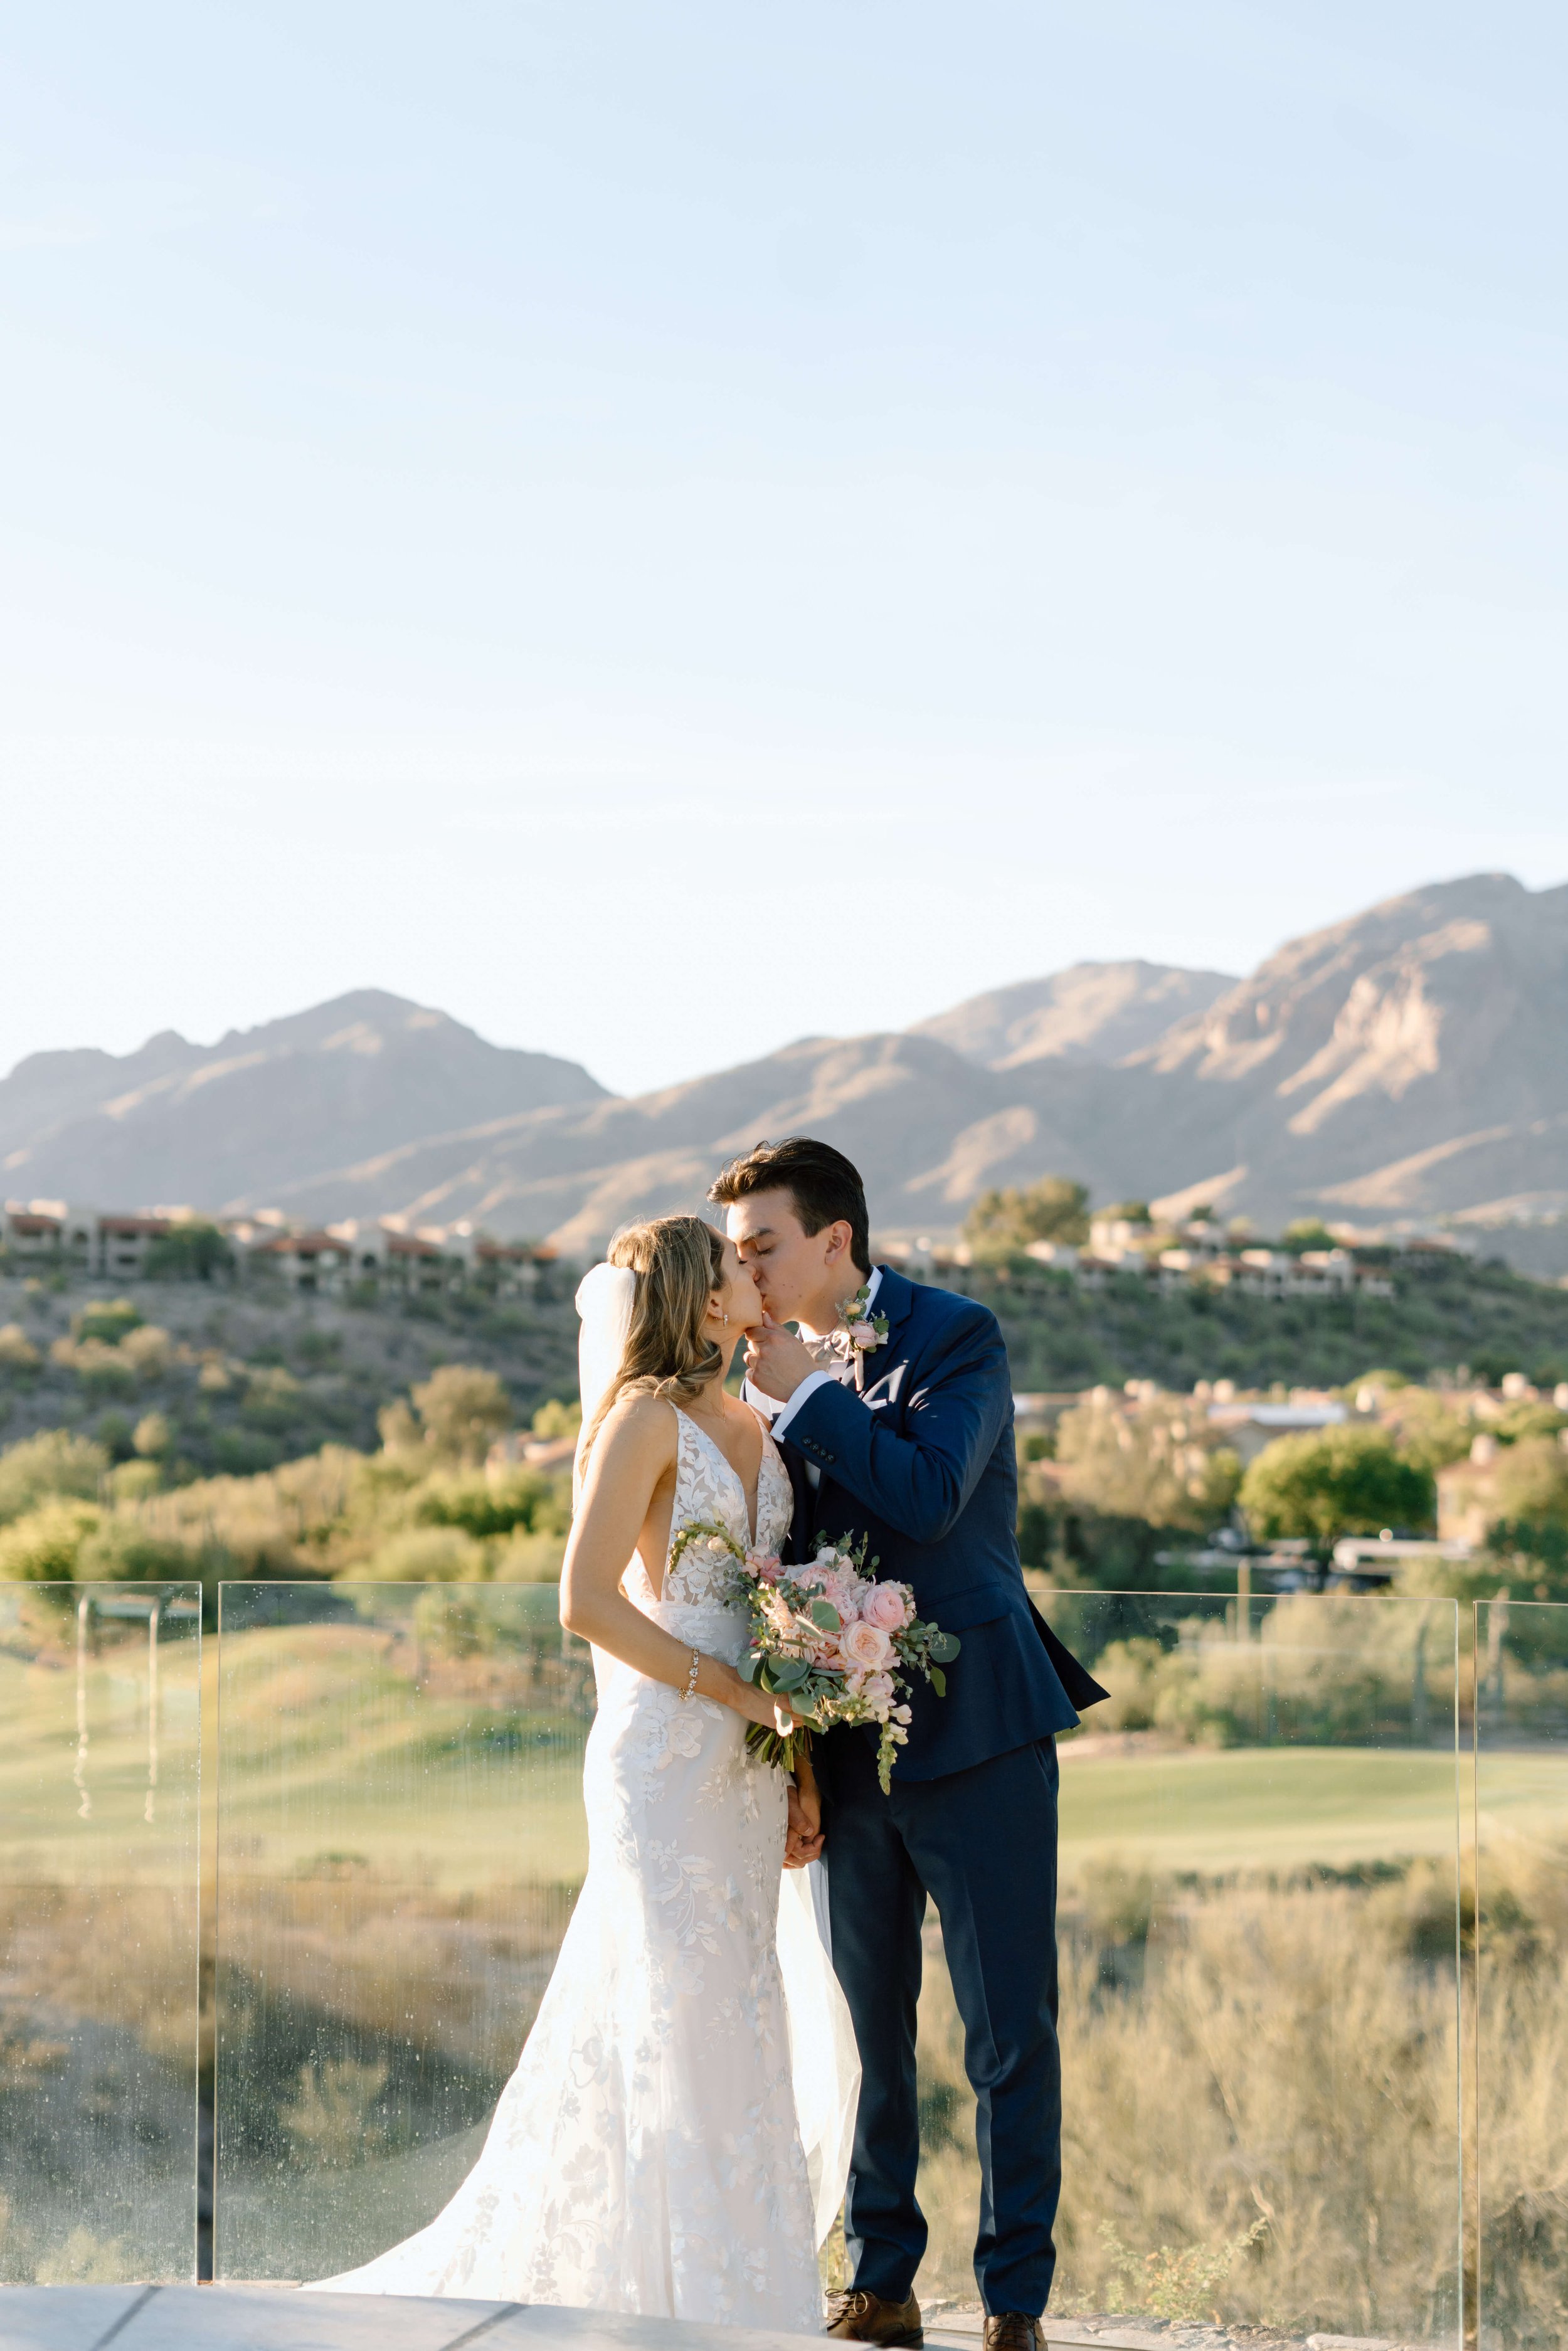 TheMarroquins-PhotographybyAliK-HaciendaDelSol-Tucson-Arizona-Wedding-Day-10.jpg